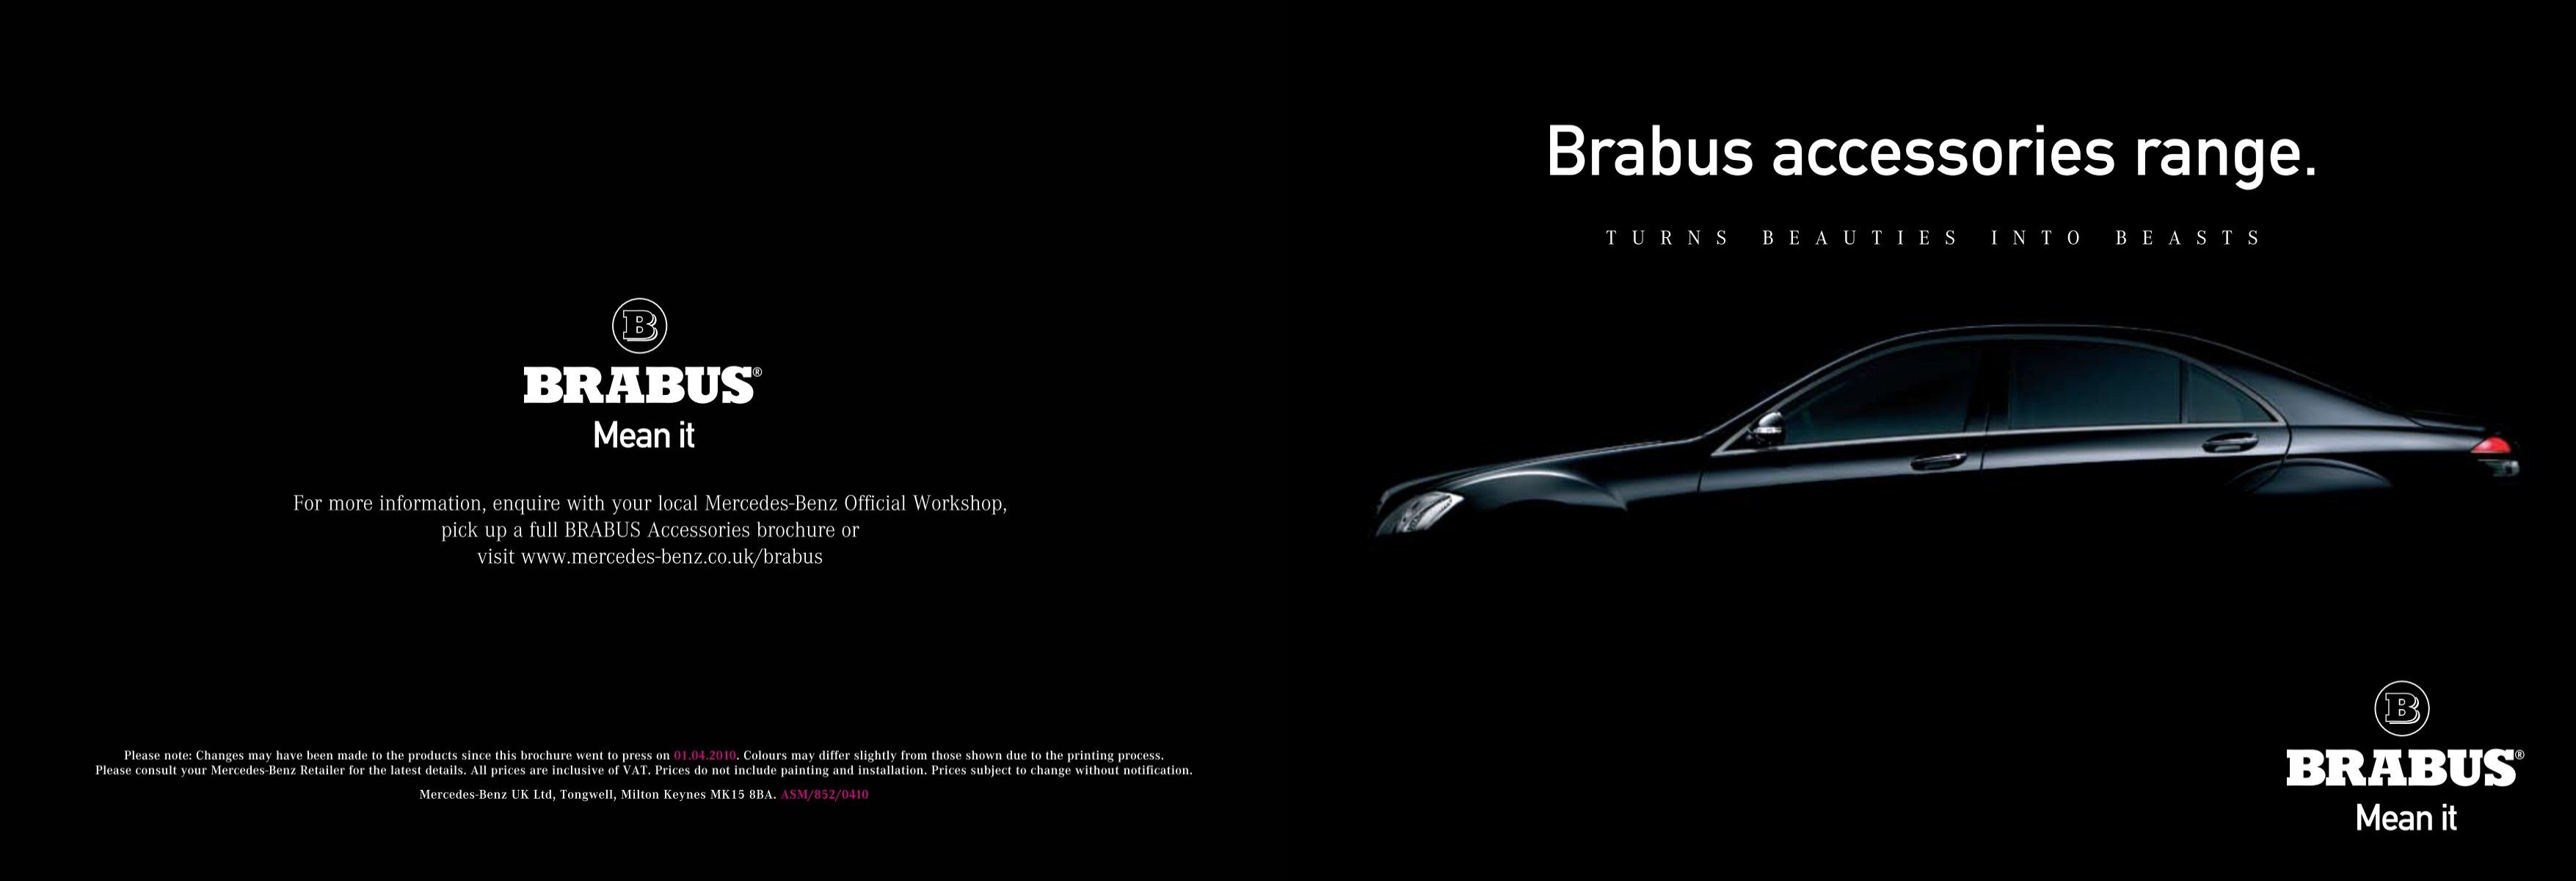 Brabus accessories range. - Mercedes-Benz UK